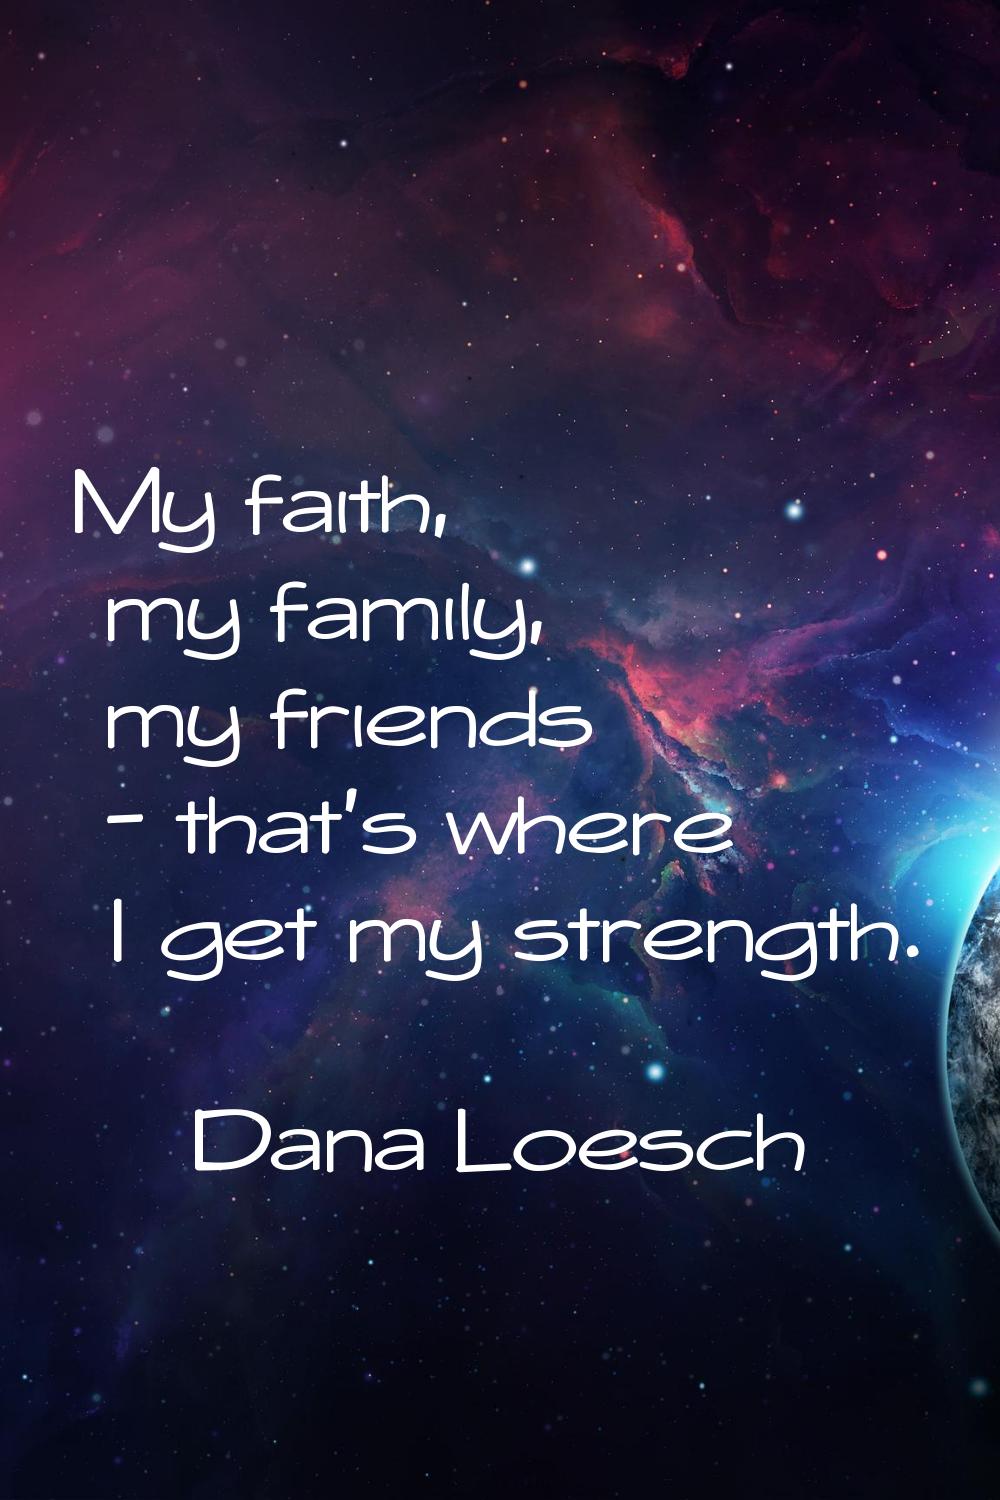 My faith, my family, my friends - that's where I get my strength.